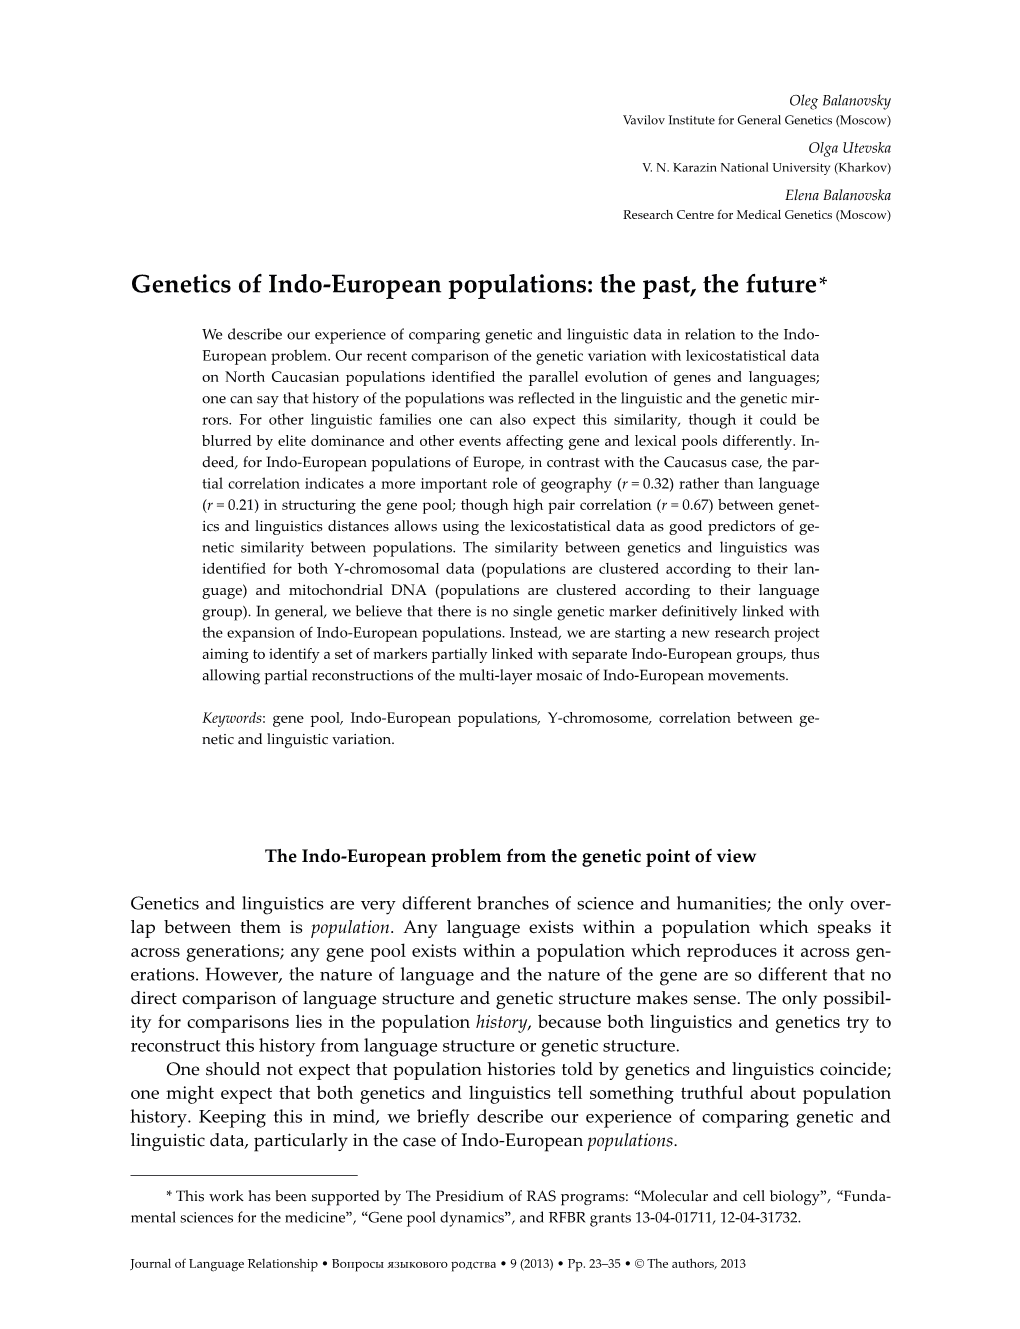 Genetics of Indo-European Populations: the Past, the Future *